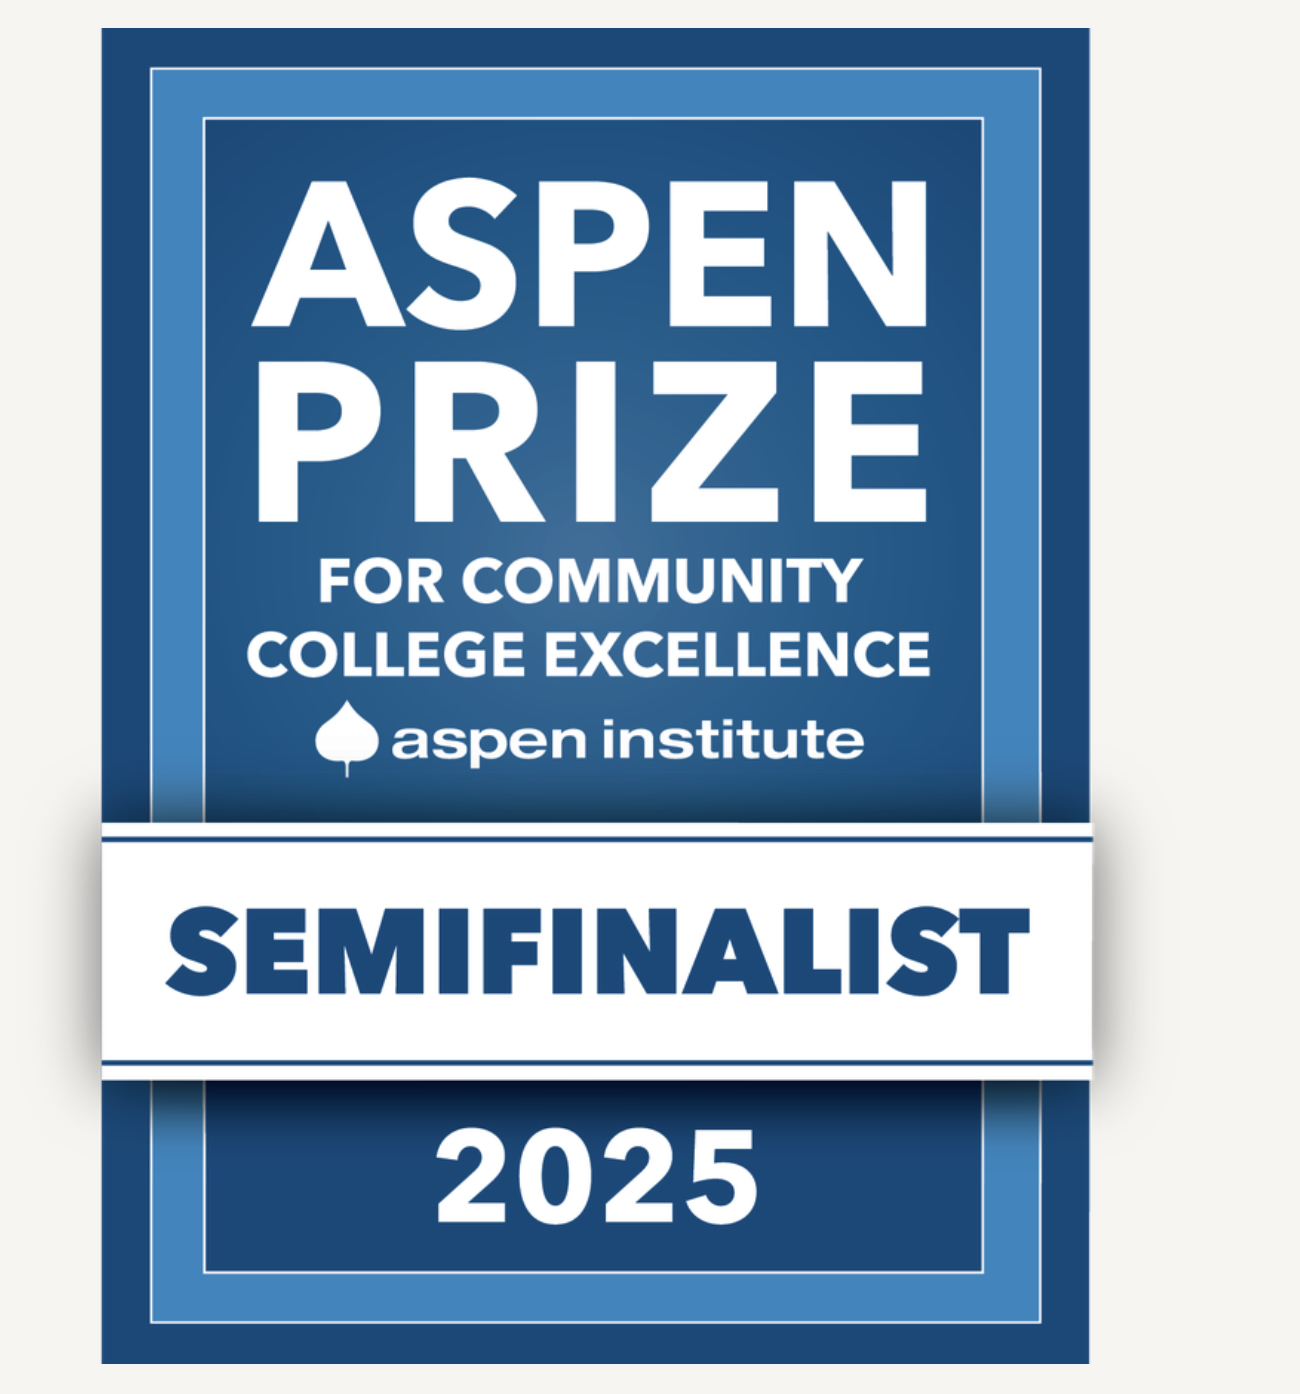 Aspen Prize Semifinalist badge